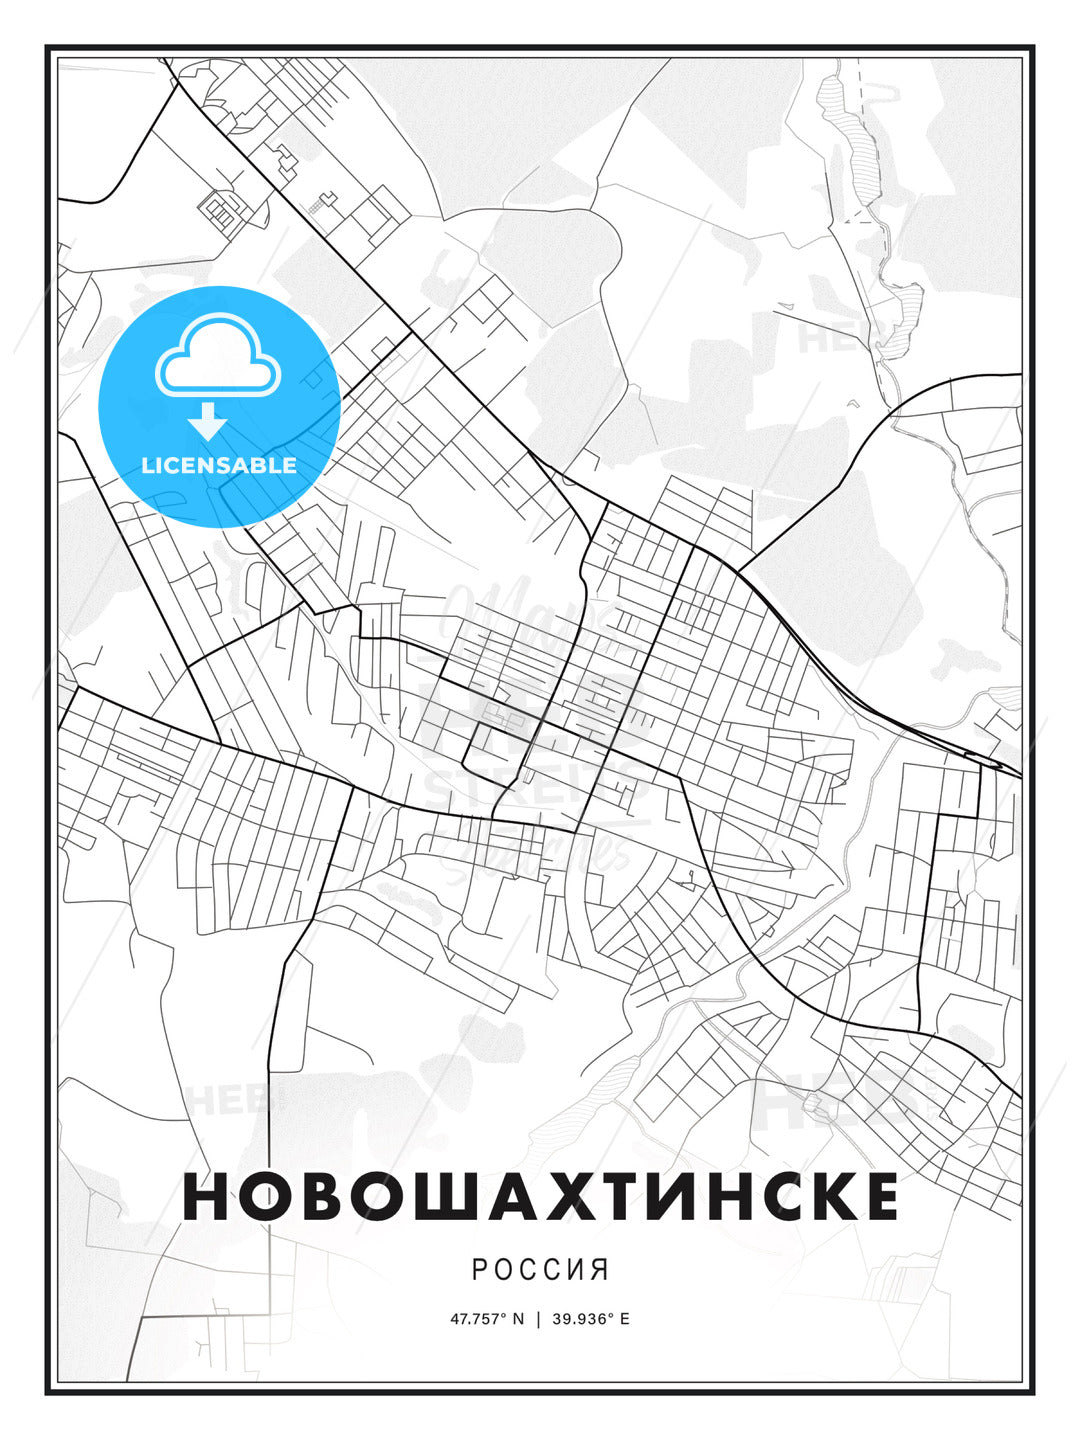 НОВОШАХТИНСКЕ / Novoshakhtinsk, Russia, Modern Print Template in Various Formats - HEBSTREITS Sketches